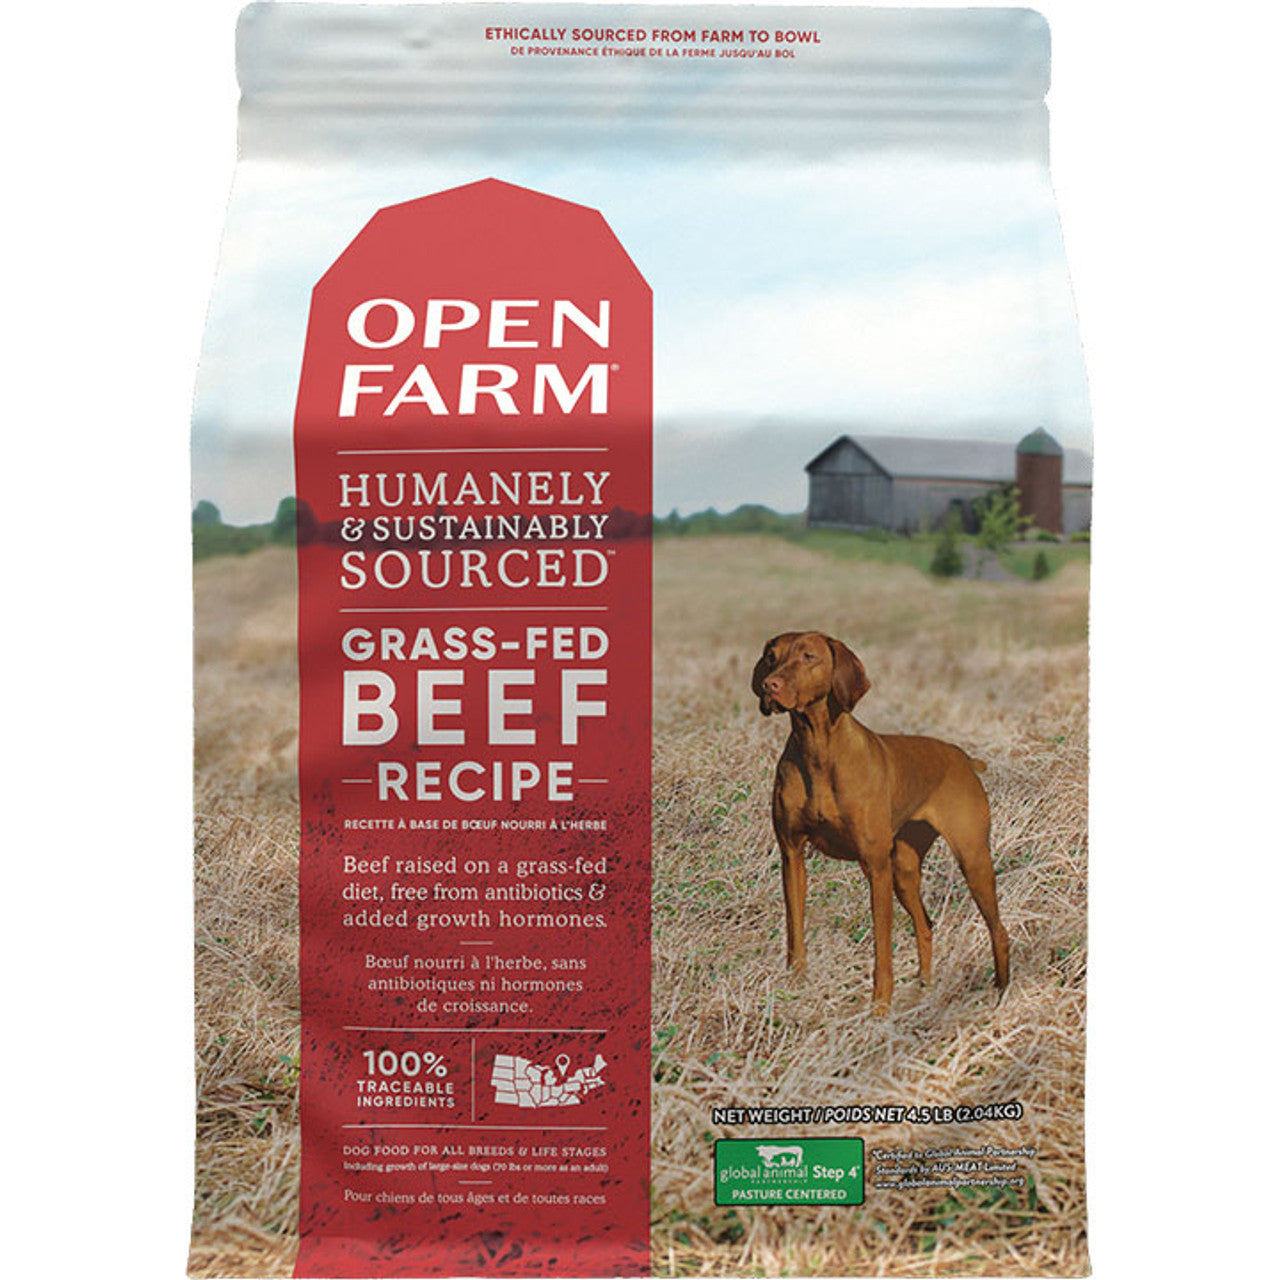 Open Farm Grass-fed Beef 22lb